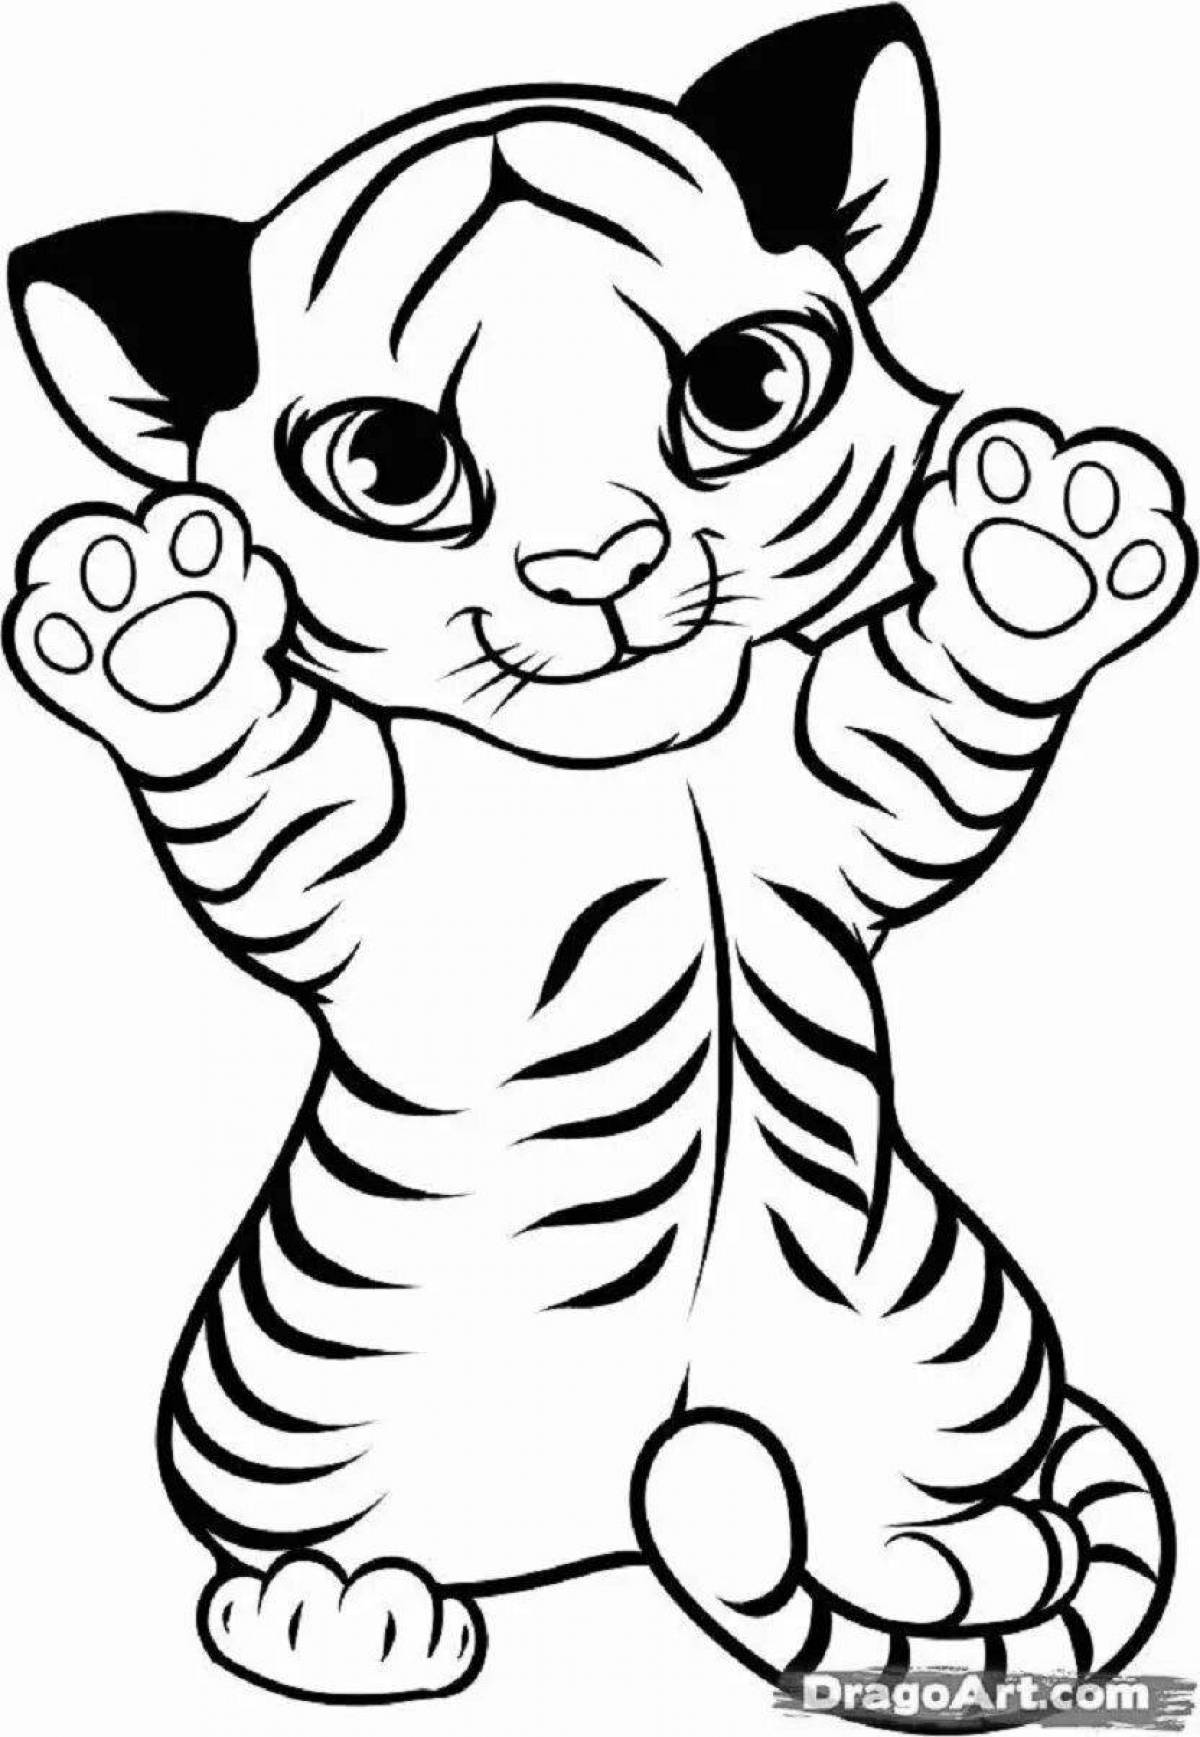 Adorable tiger coloring page